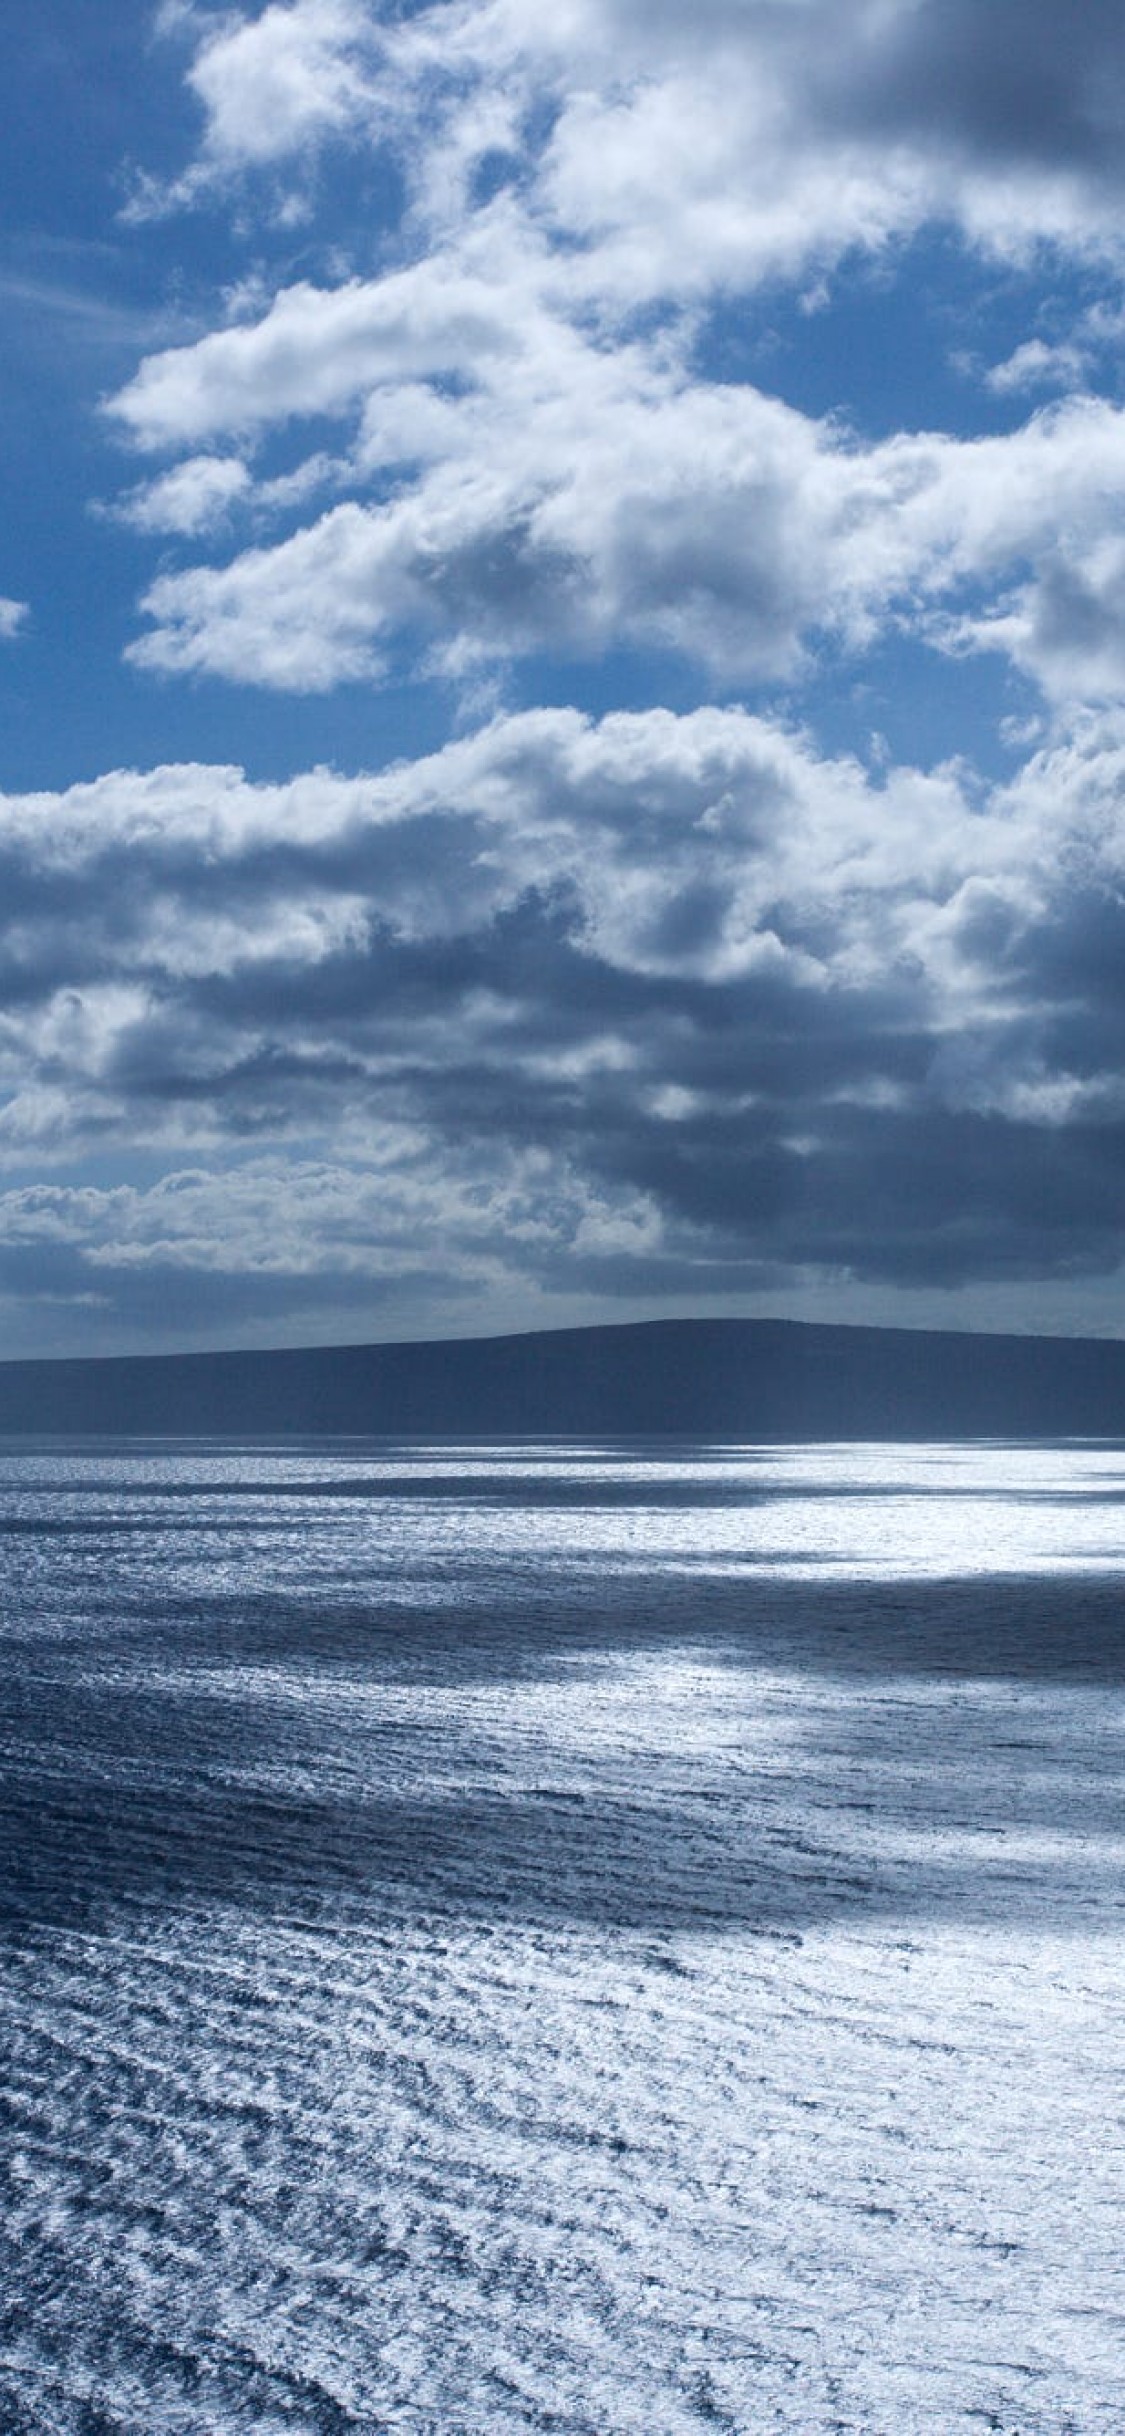 Iphone X Hawaii Wallpaper - Shadow Of Clouds On Water - HD Wallpaper 